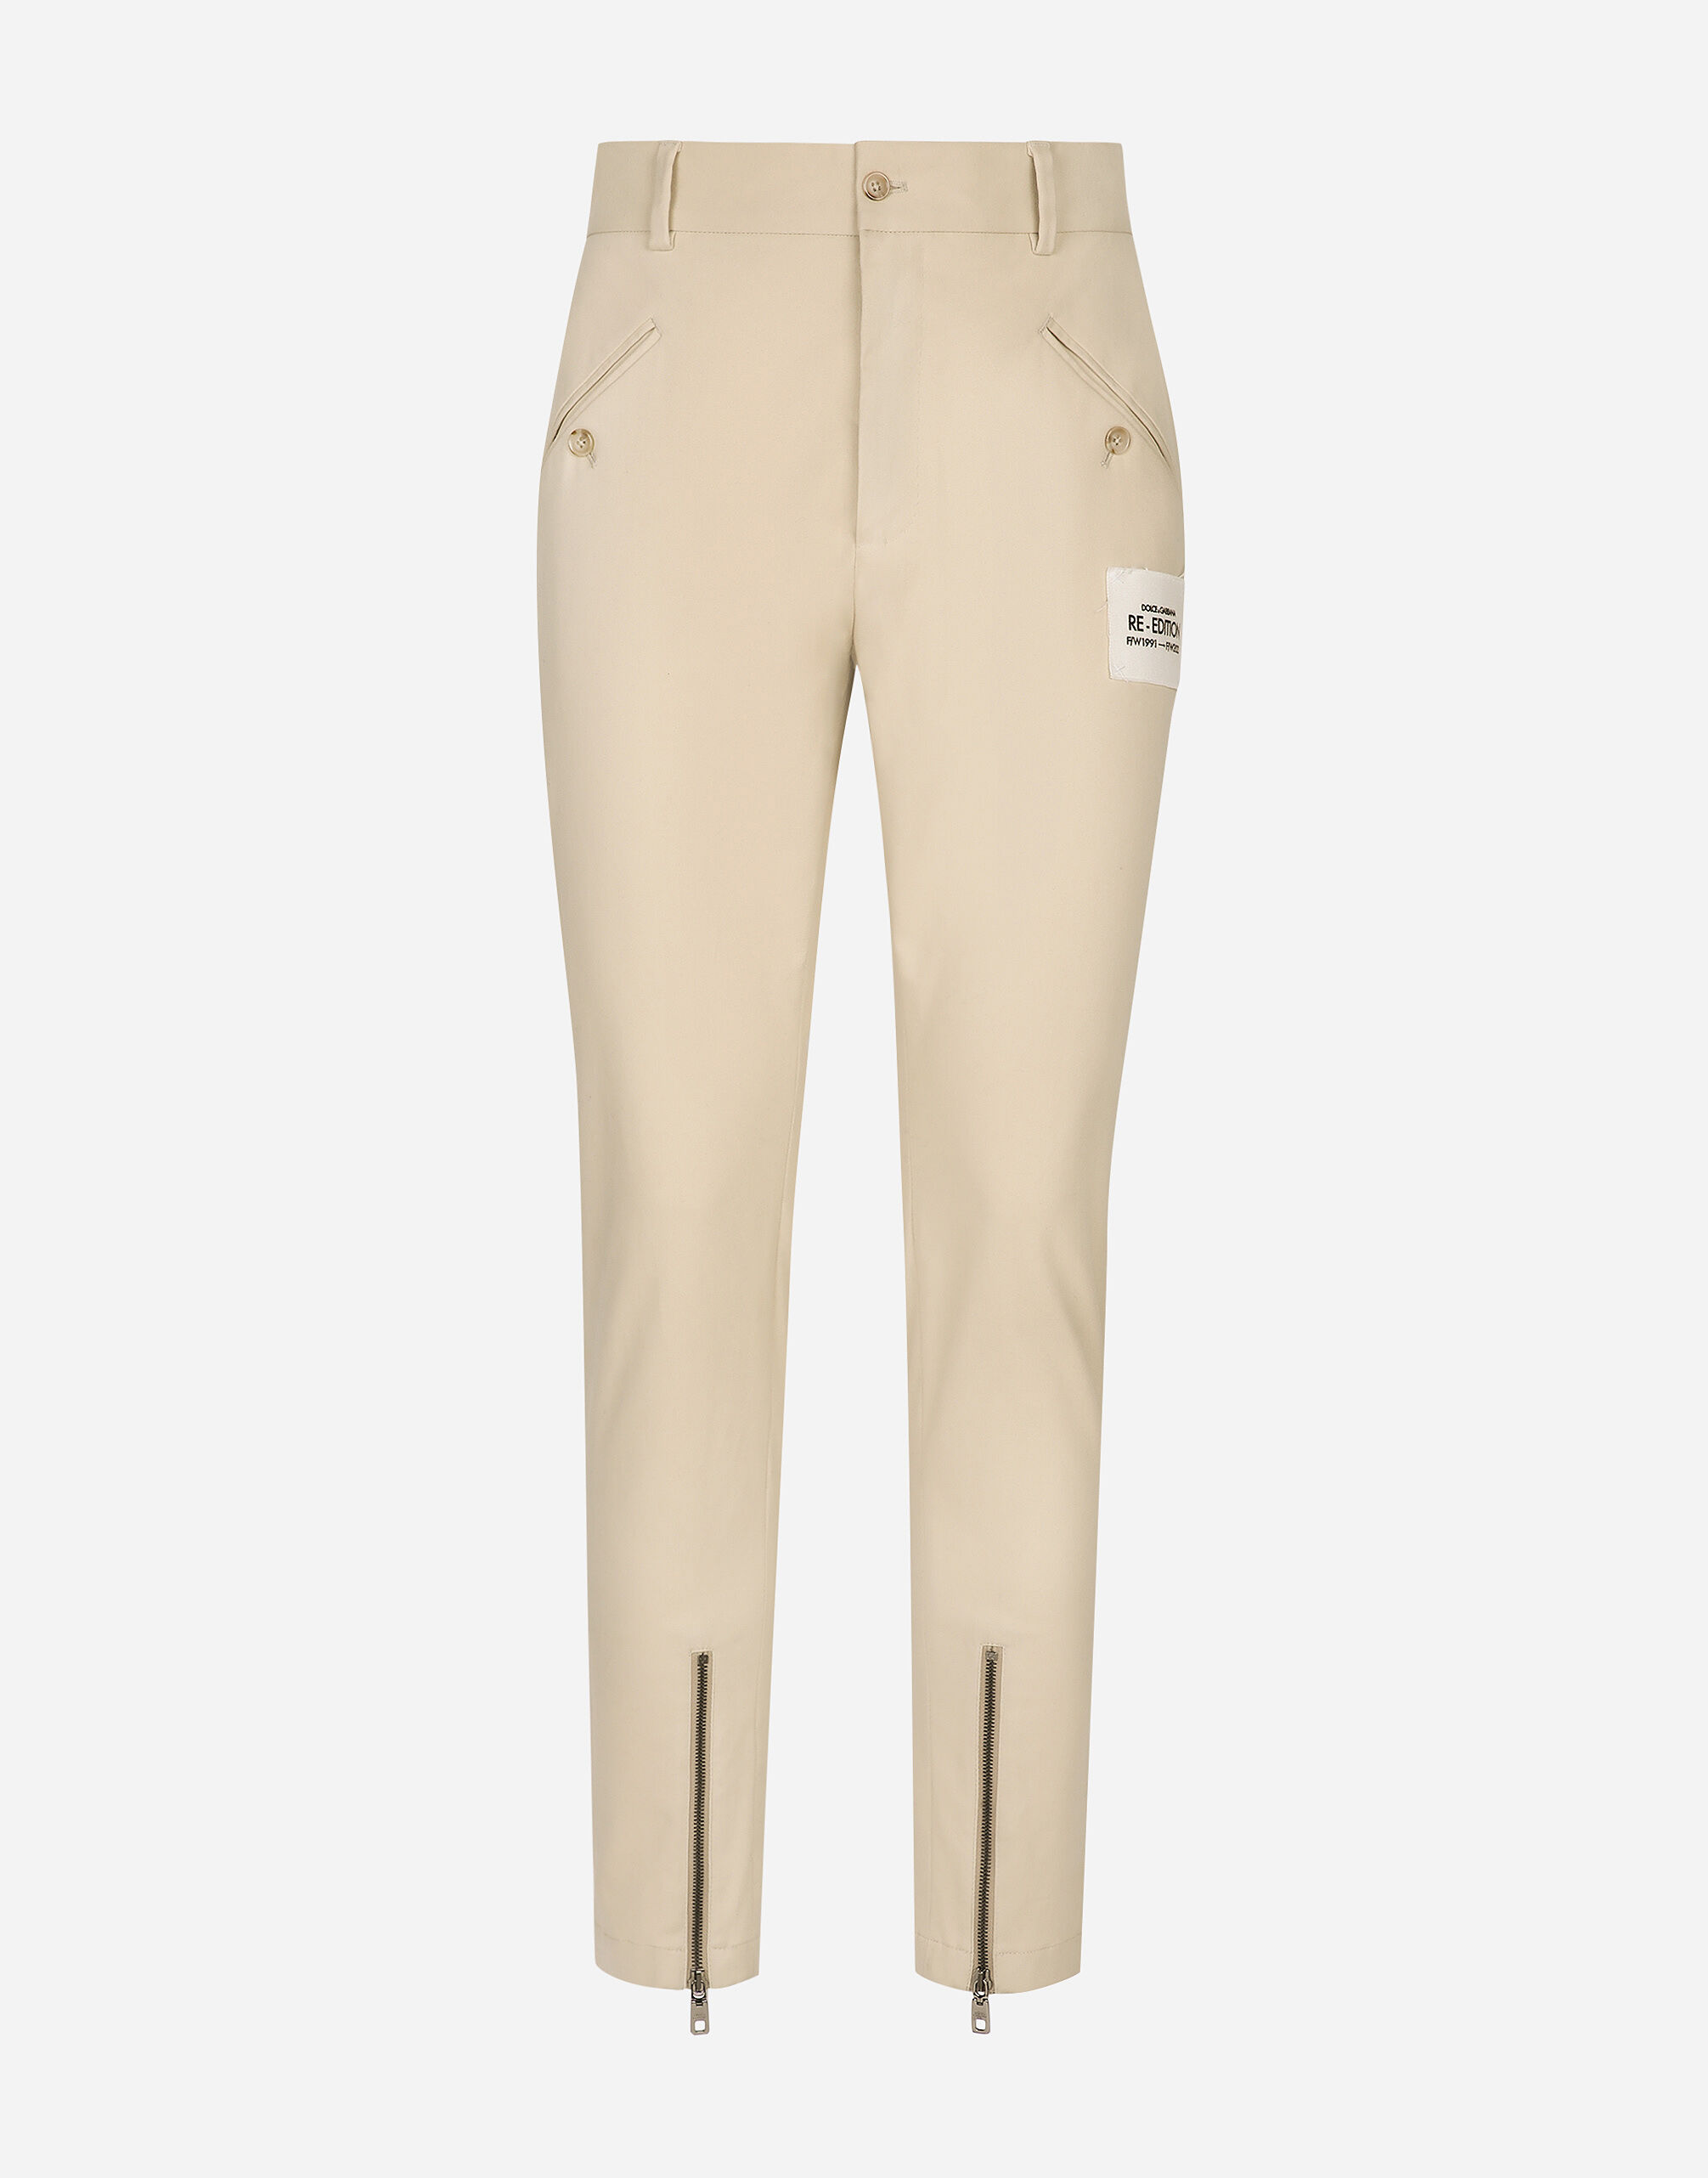 Dolce & Gabbana Stretch cotton pants with Re-Edition label Black GP0D4TFU5PY